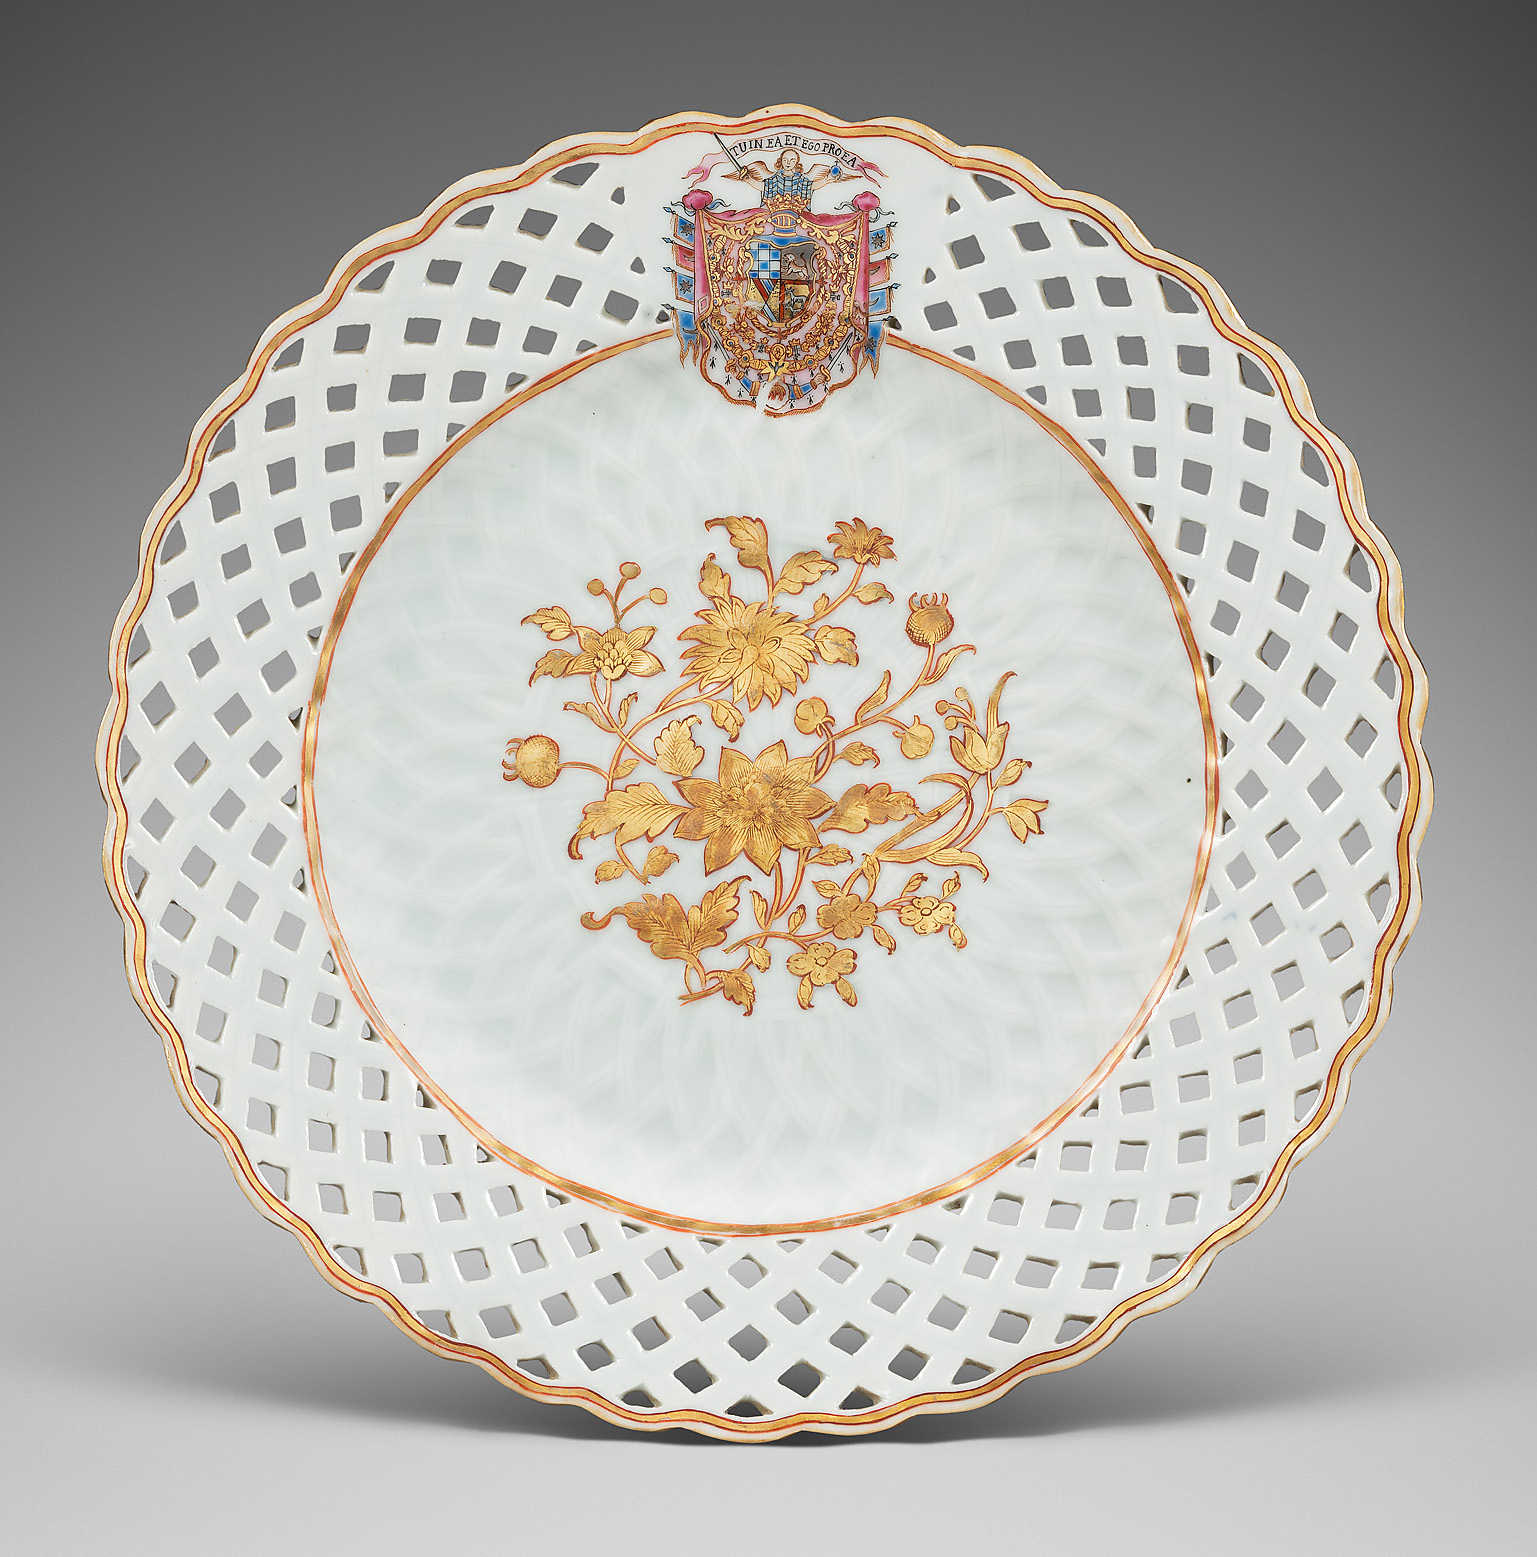 Porcelaine Qianlong (1736-1795), ca. 1765, Chine